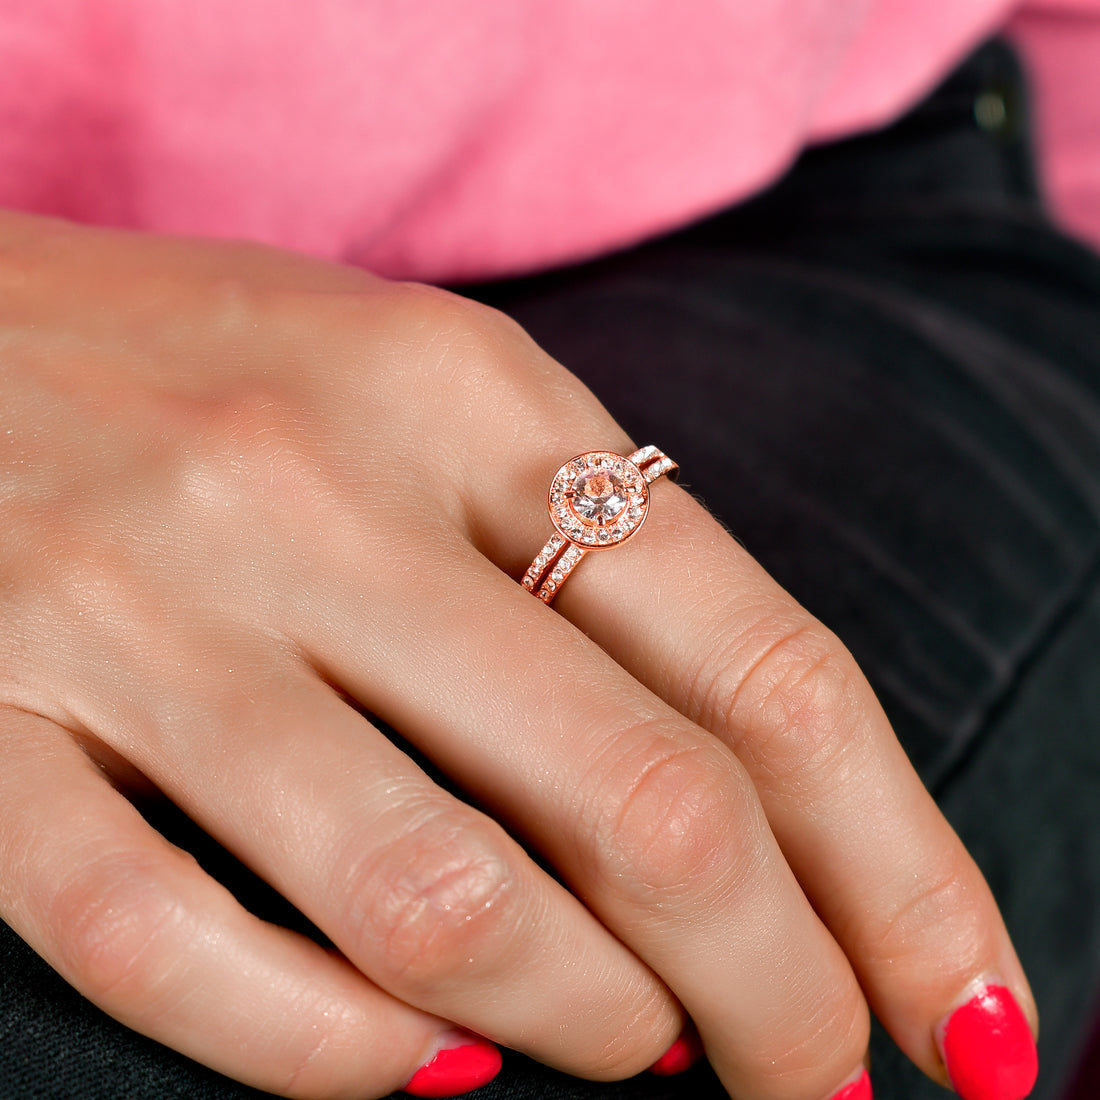 Bloom Halo Ring Embellished with  Swarovski® Crystals